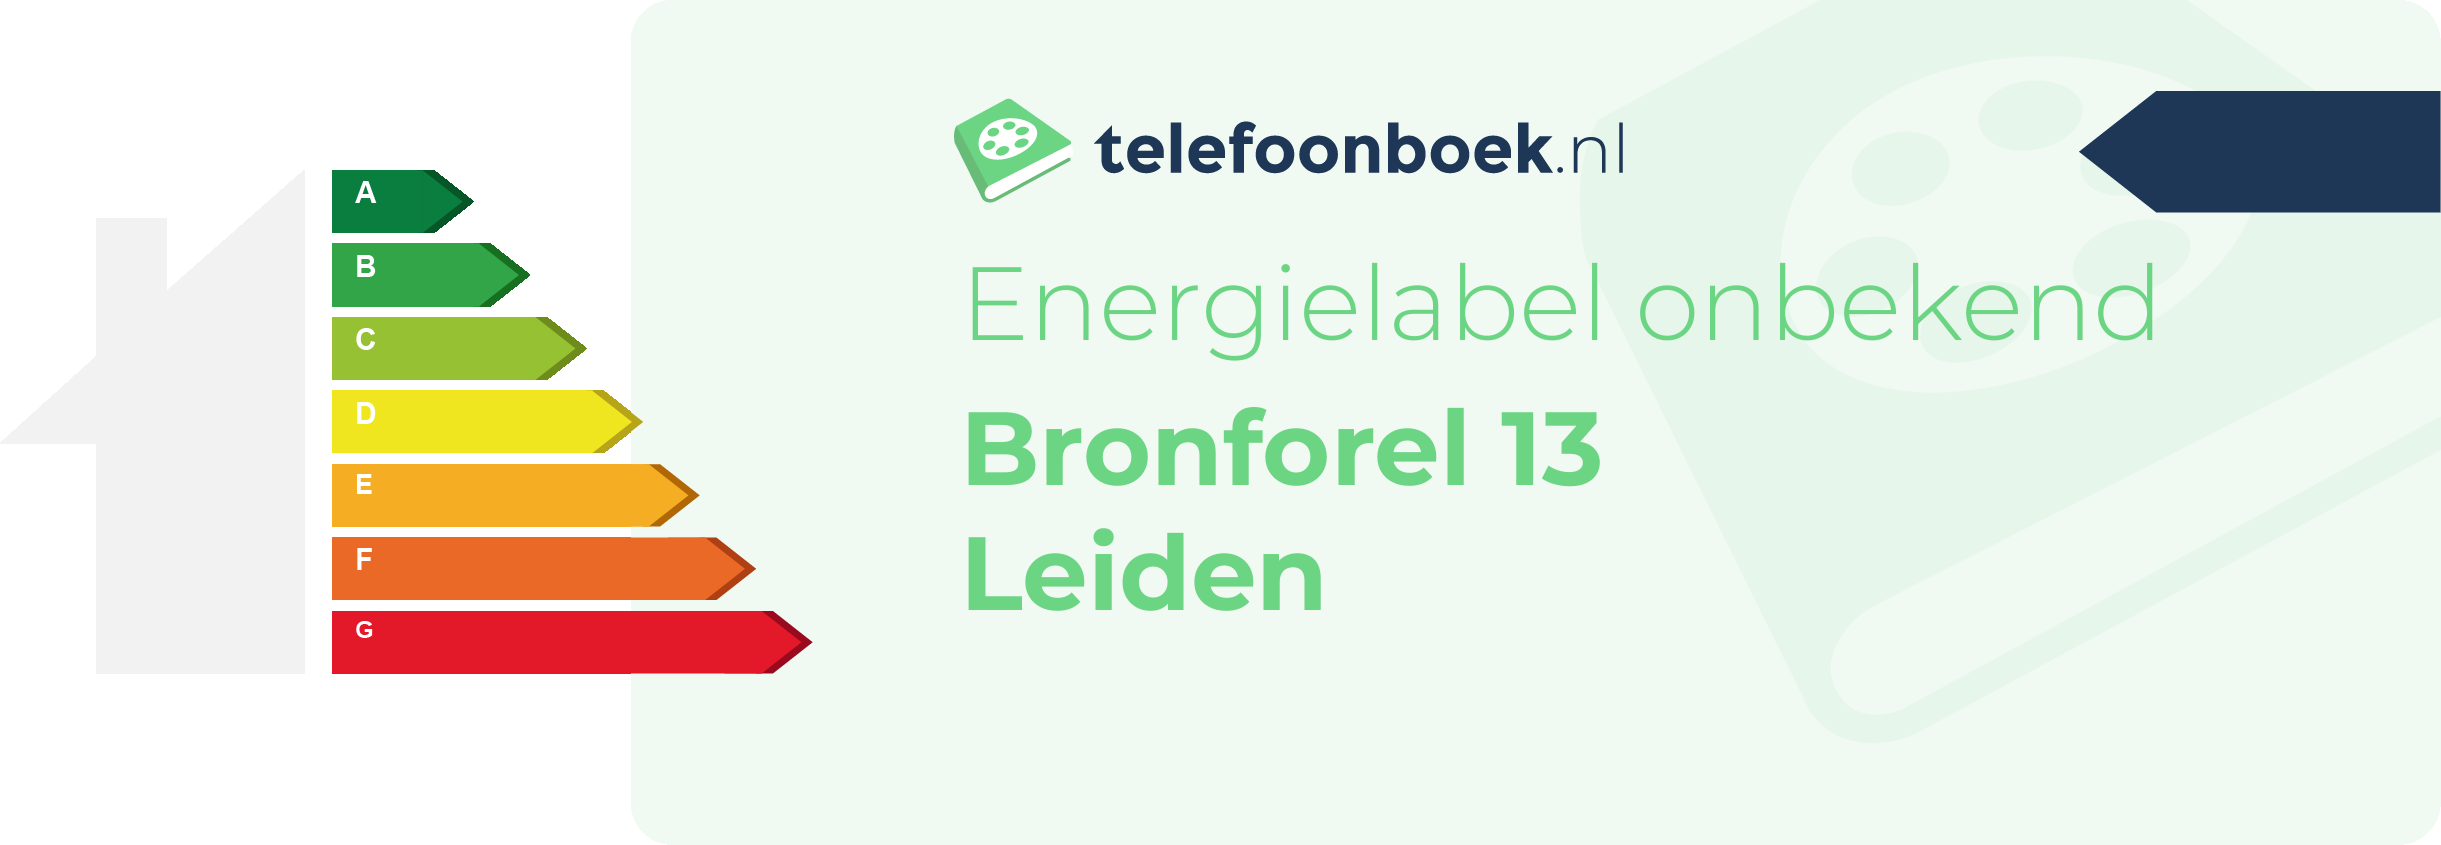 Energielabel Bronforel 13 Leiden